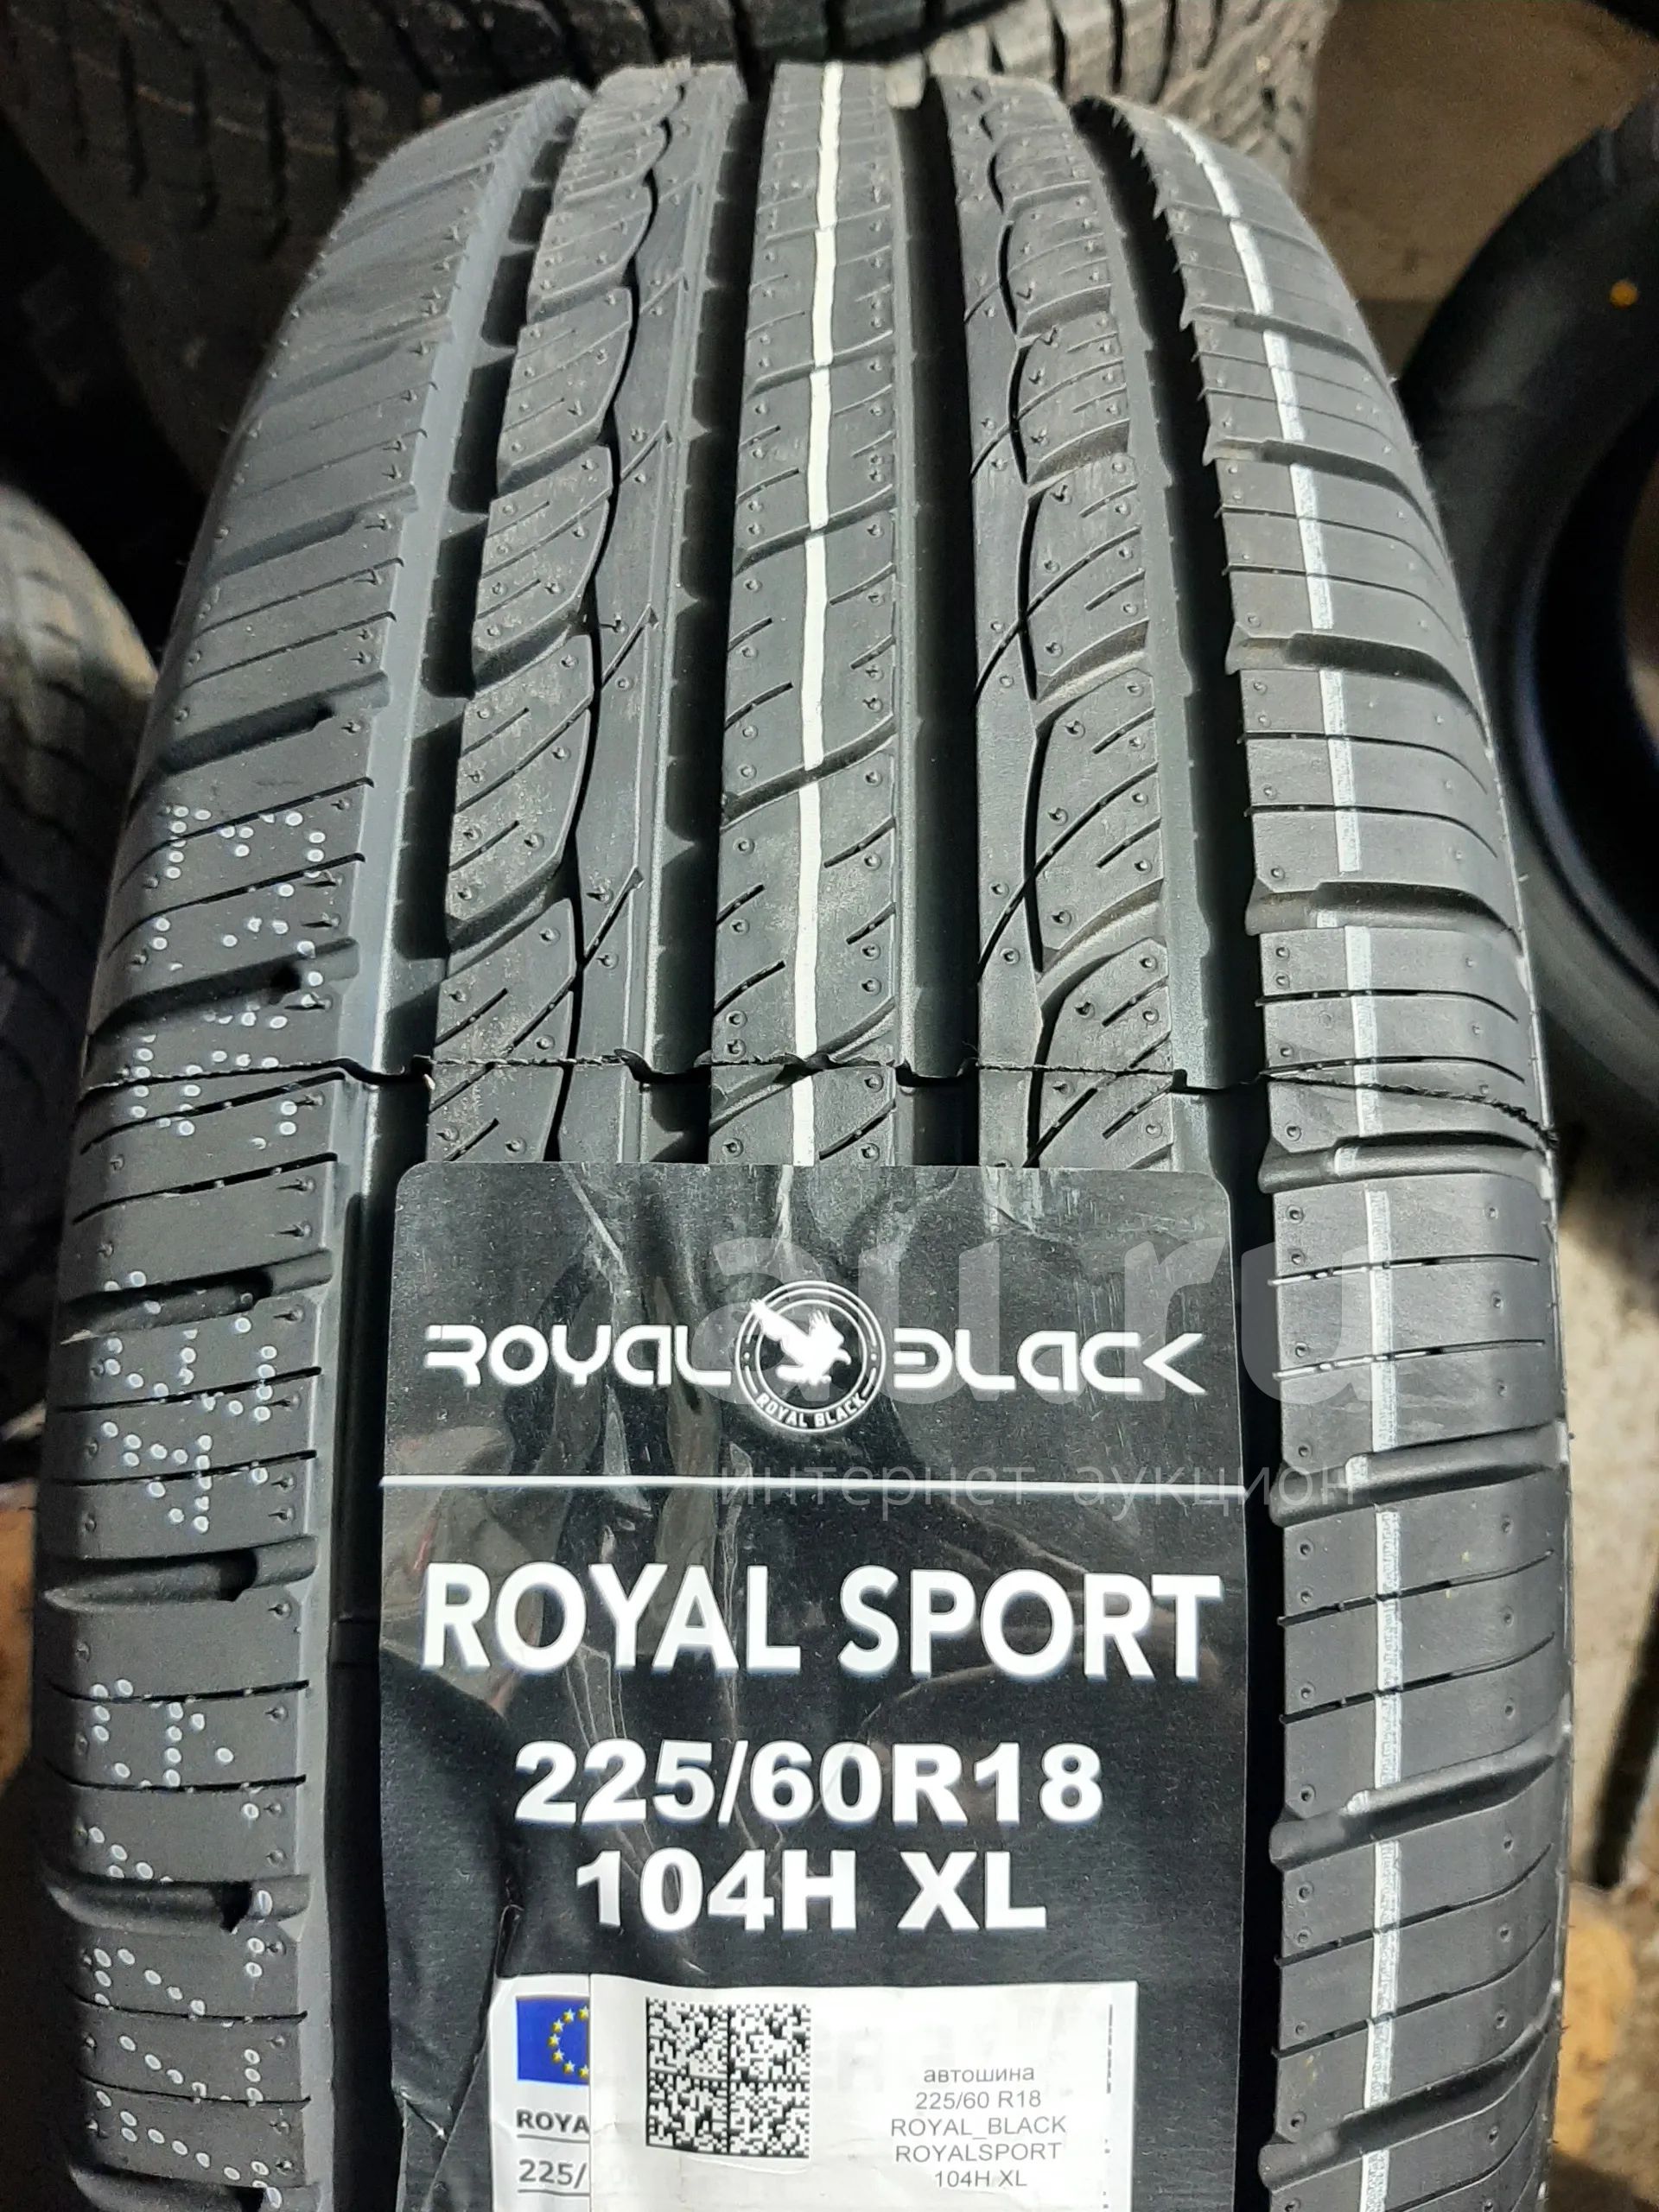 Шины royal sport. Автошина Royal Black ROYALSPORT 225/60 r17 99h. Шины Royal Black Royal Sport. Royal Black 225/55r18 Royal Sport 98h. Royal Black ROYALSPORT 104h XL отзывы.